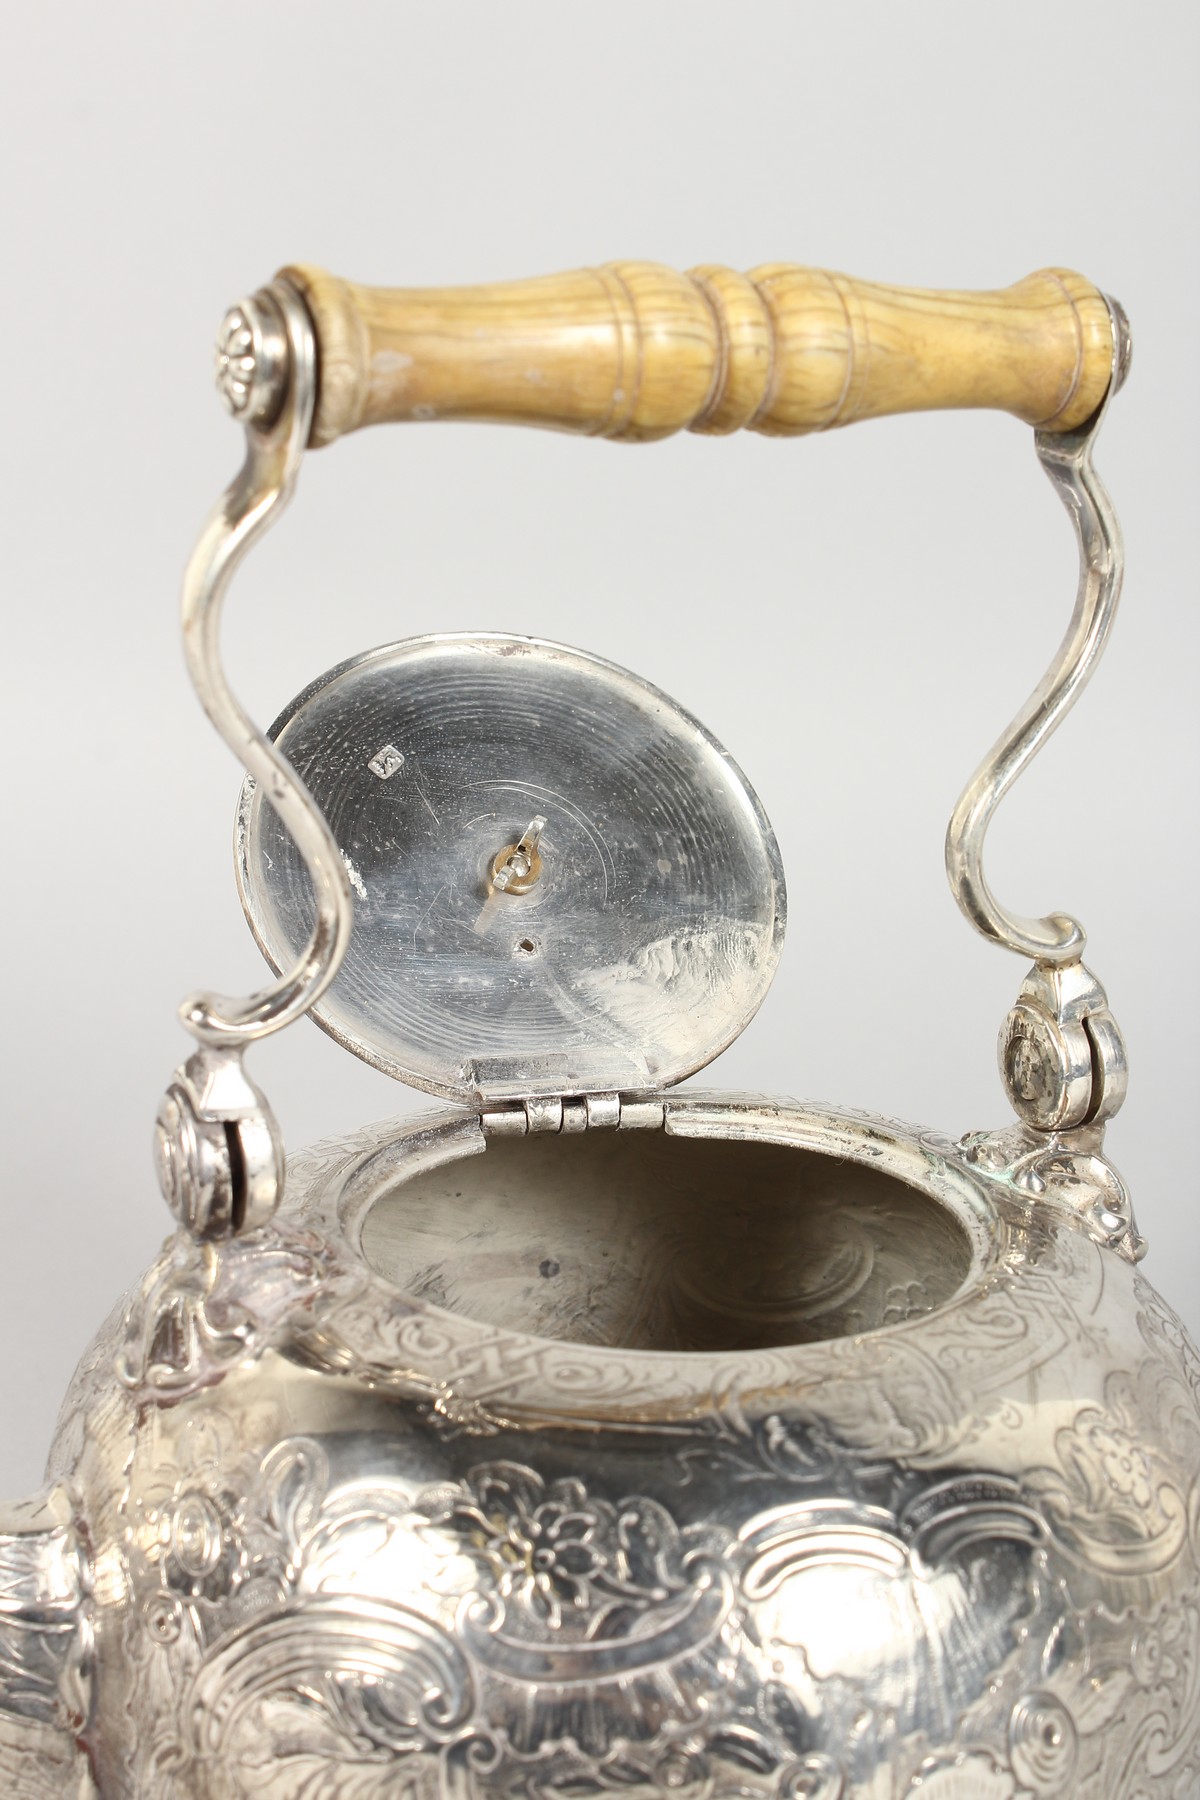 A GEORGE II TEA KETTLE with ivory handle. London 1730. Maker: Gabriel Sleath. - Image 5 of 7